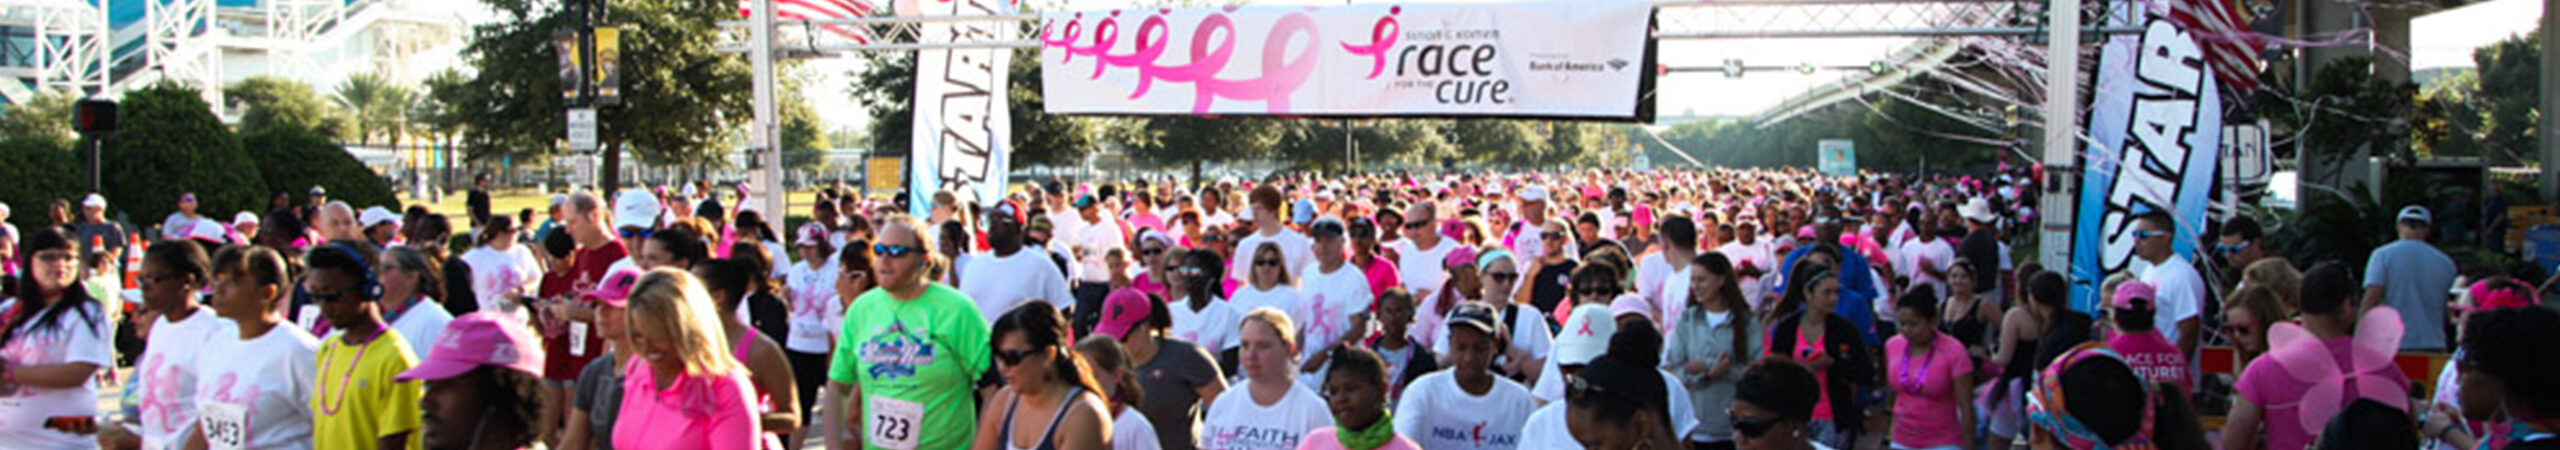 Susan G Komen Race for the Cure 2015